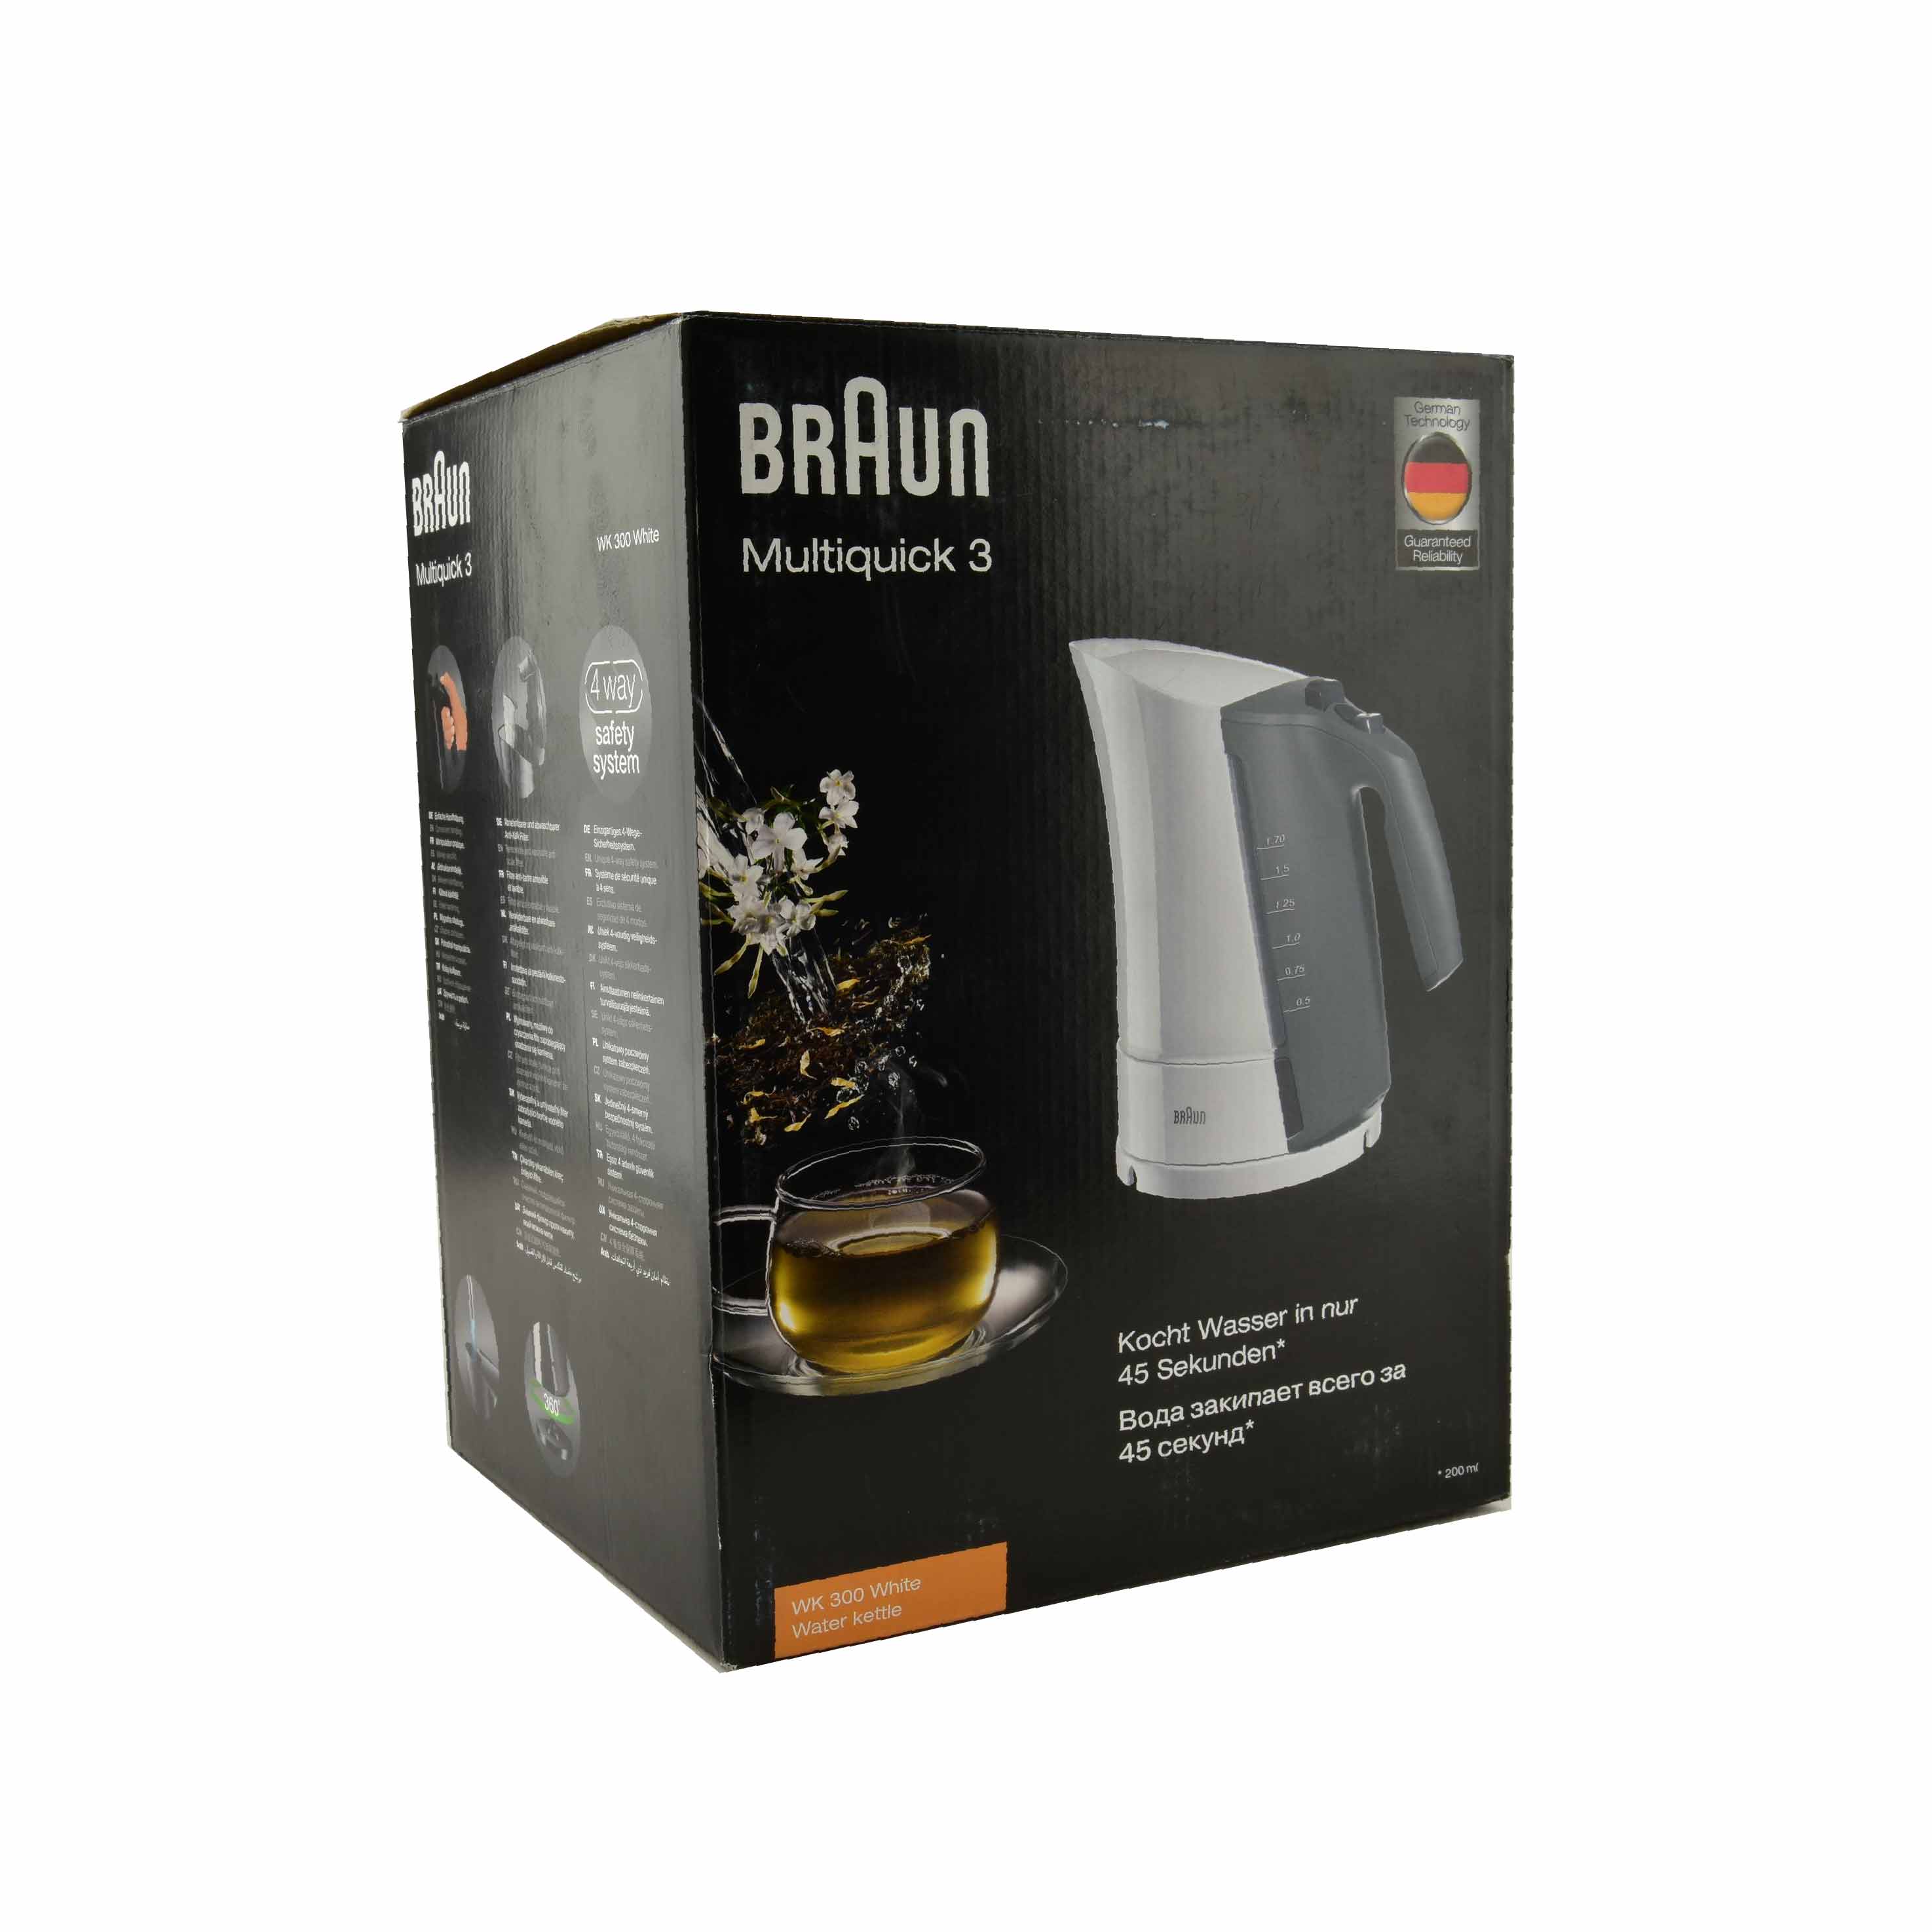 Braun MultiQuick 3 Kettle - 1.7 liter - 2280 Watts - White